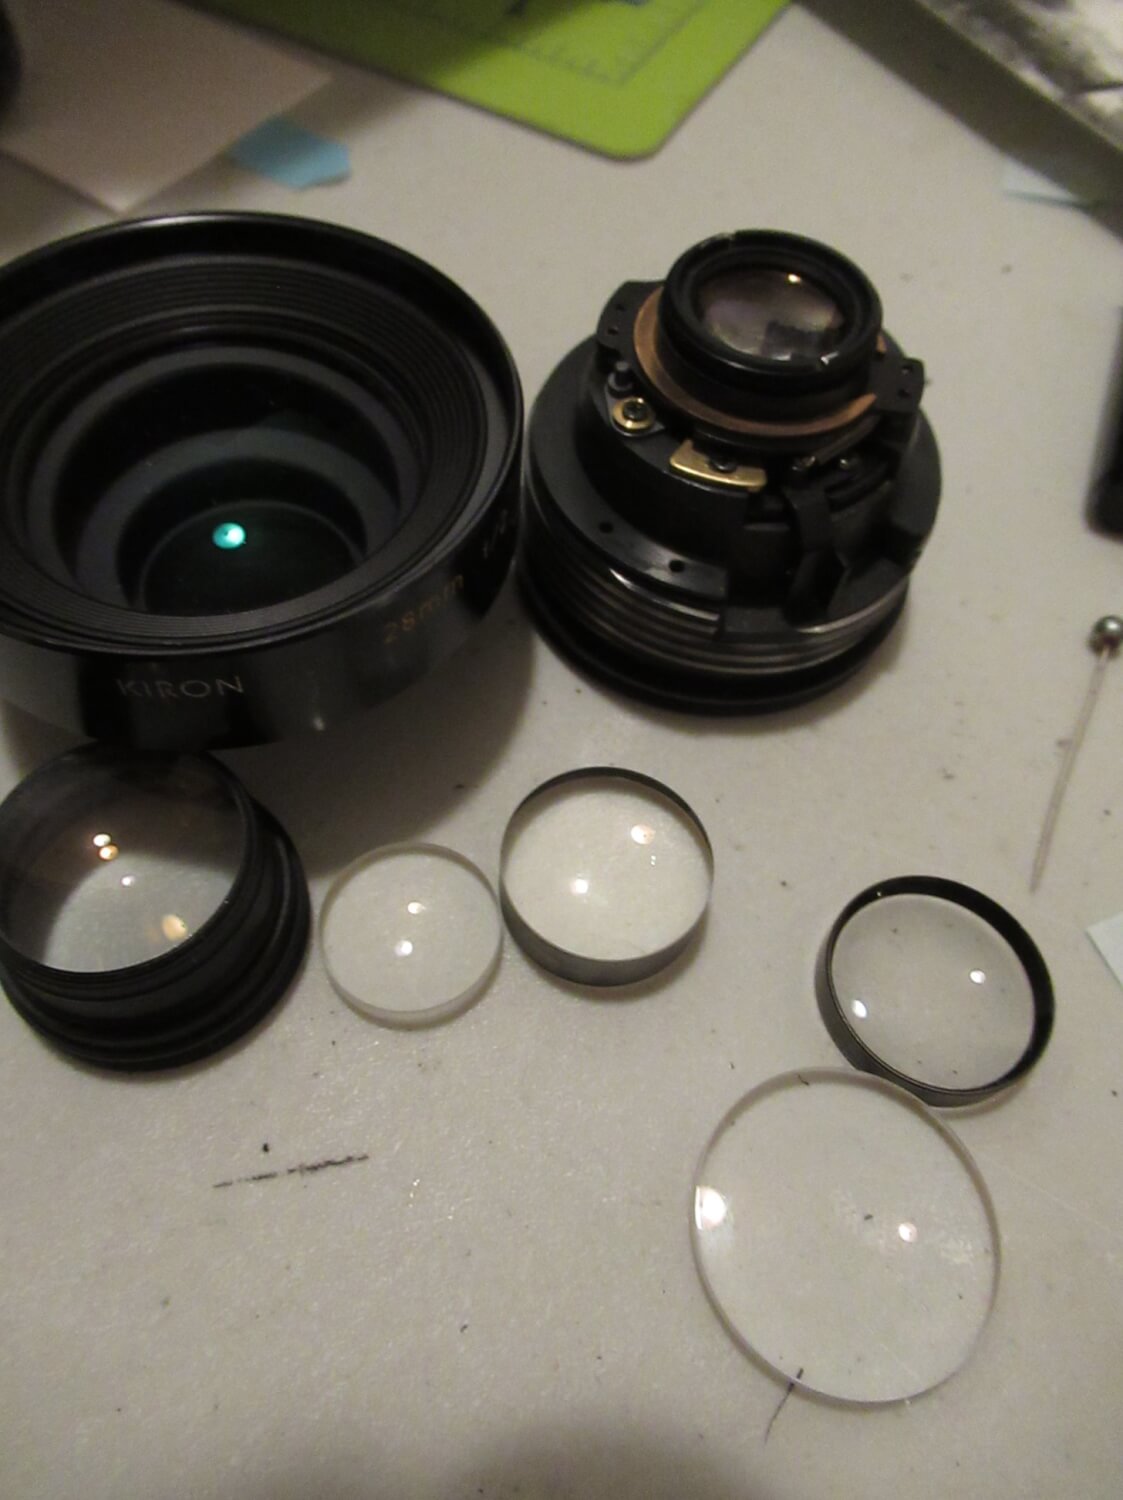 50mm lens teardown